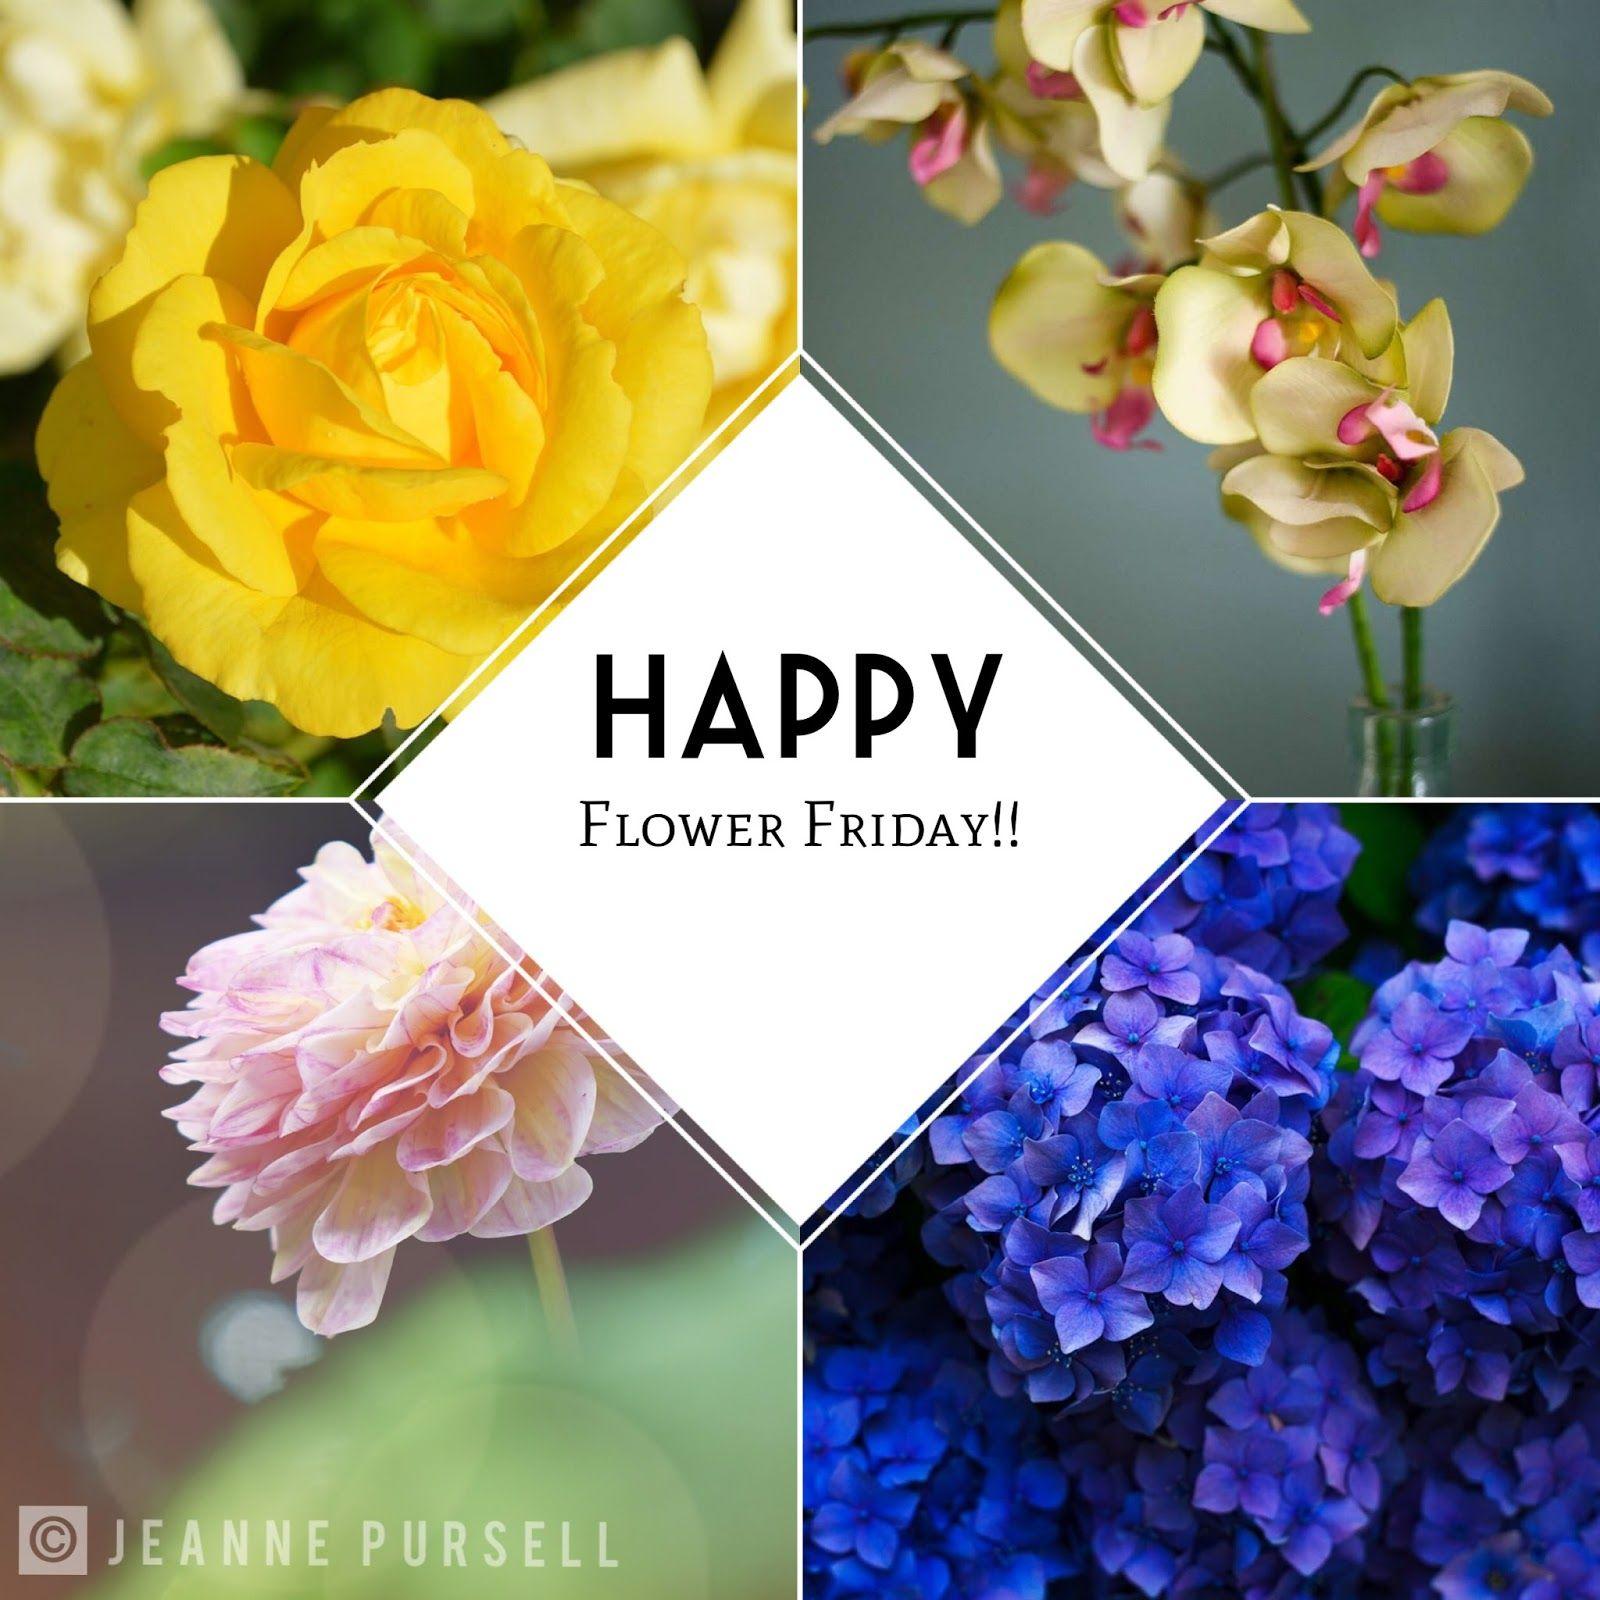 Happy Friday Flower Image